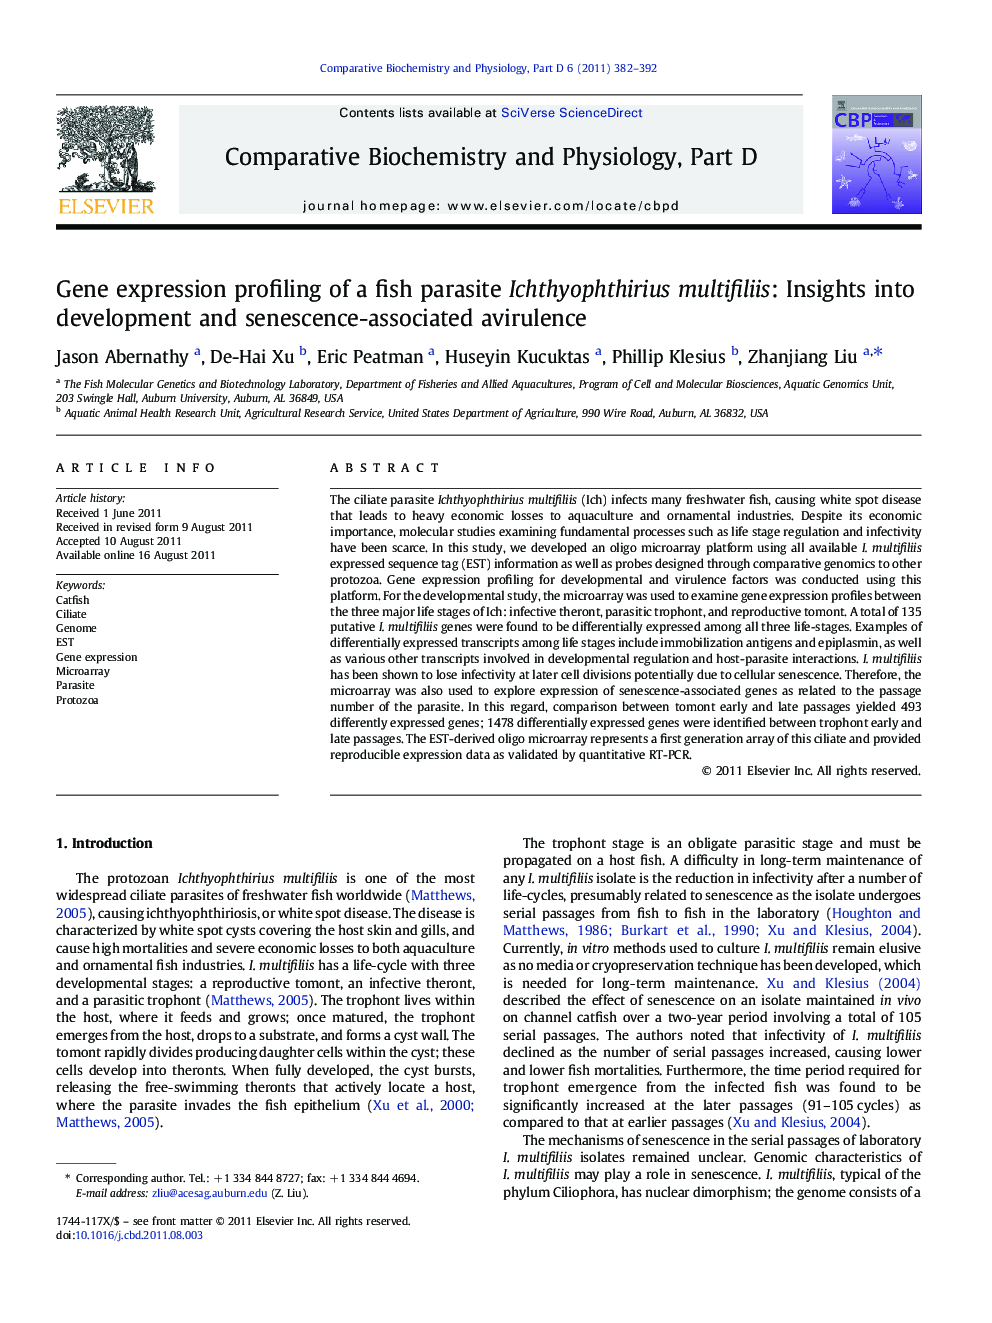 Gene expression profiling of a fish parasite Ichthyophthirius multifiliis: Insights into development and senescence-associated avirulence